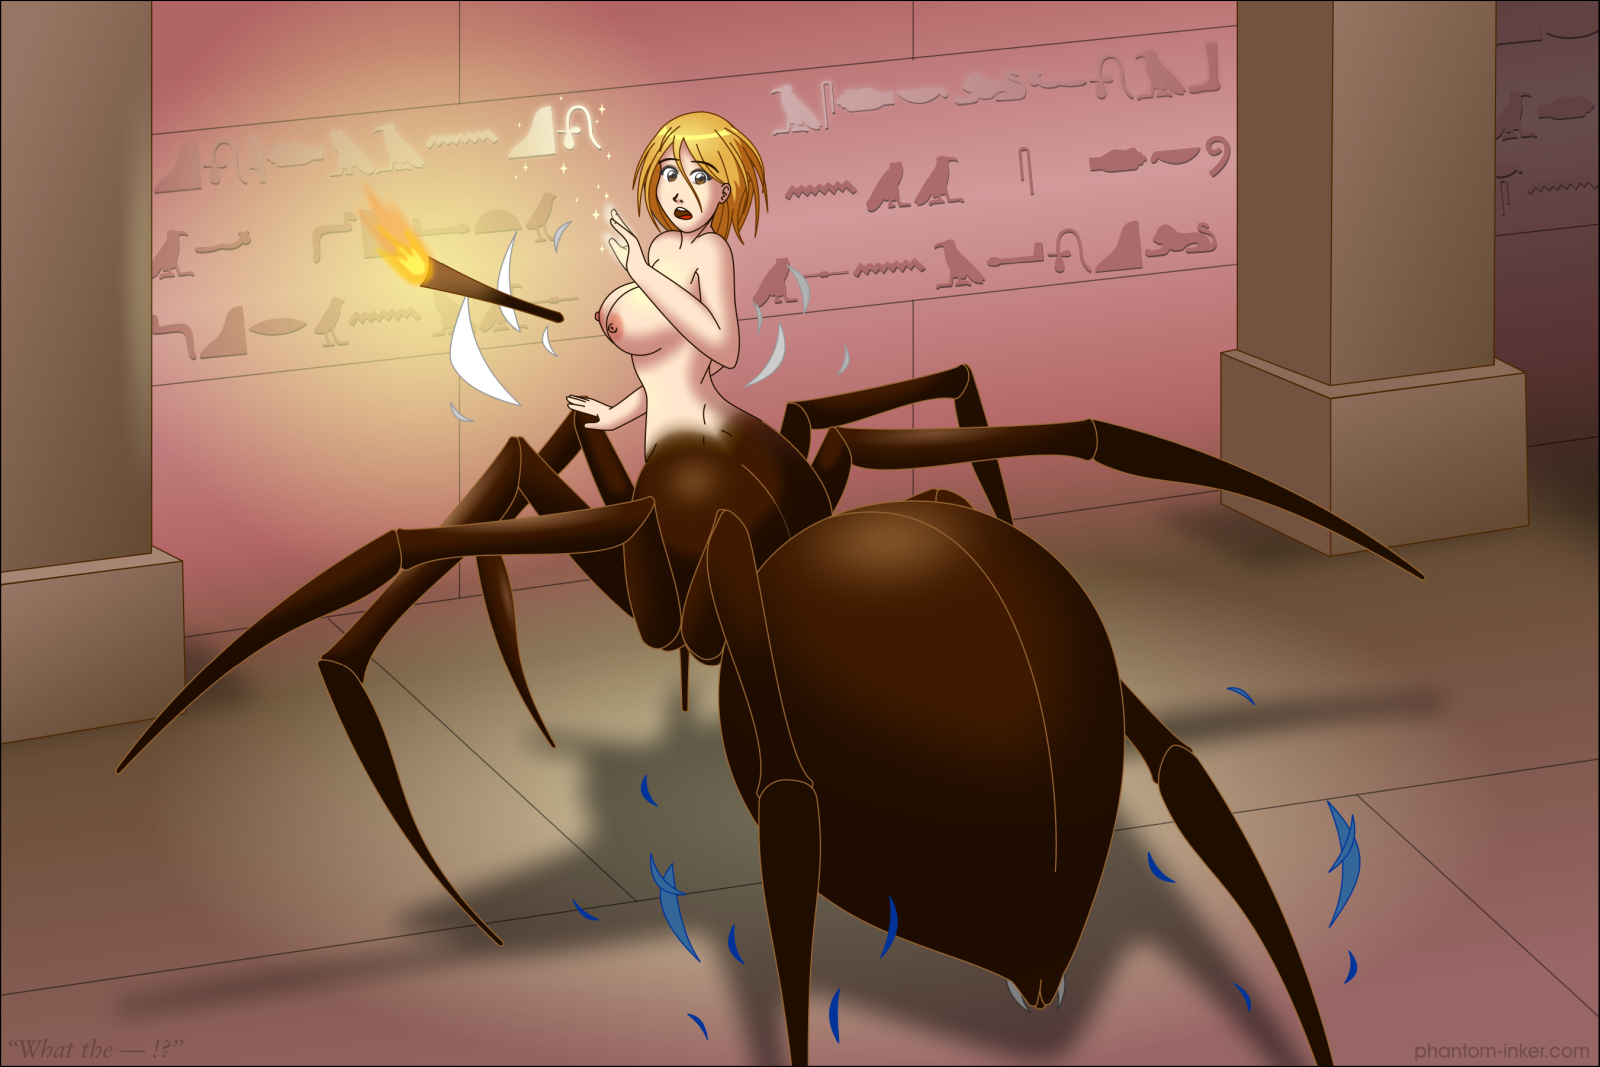 Cursed arachnid nudes